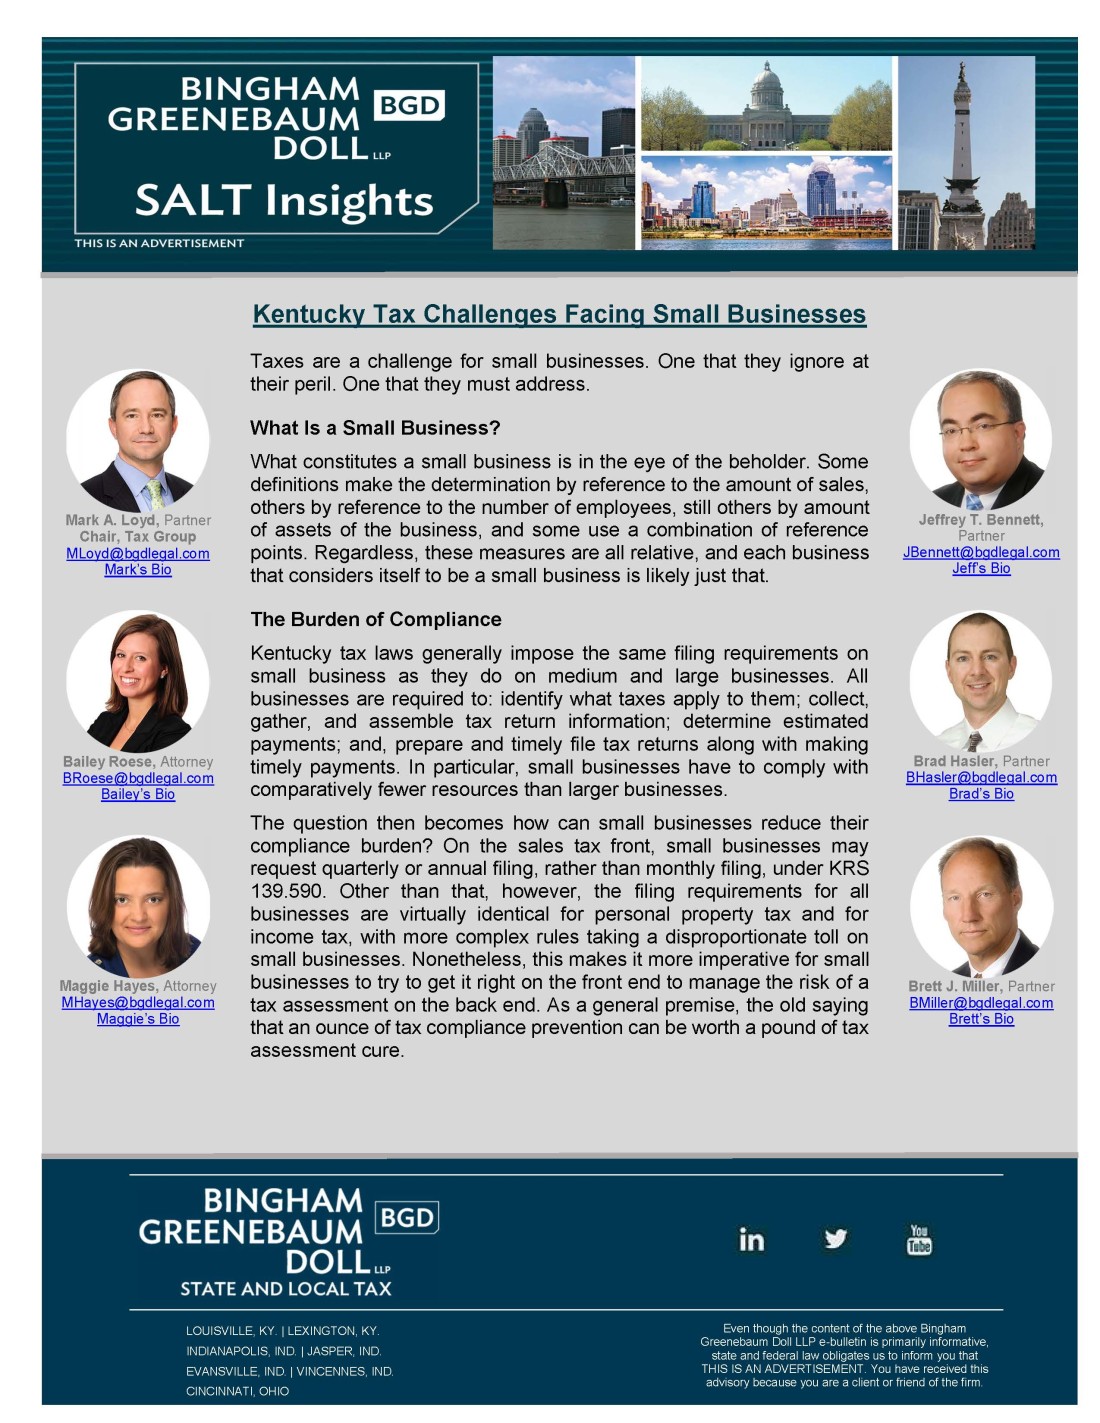 BGD SALT Insights Kentucky Tax Challenges Facing Small Businesses aug 8 2017